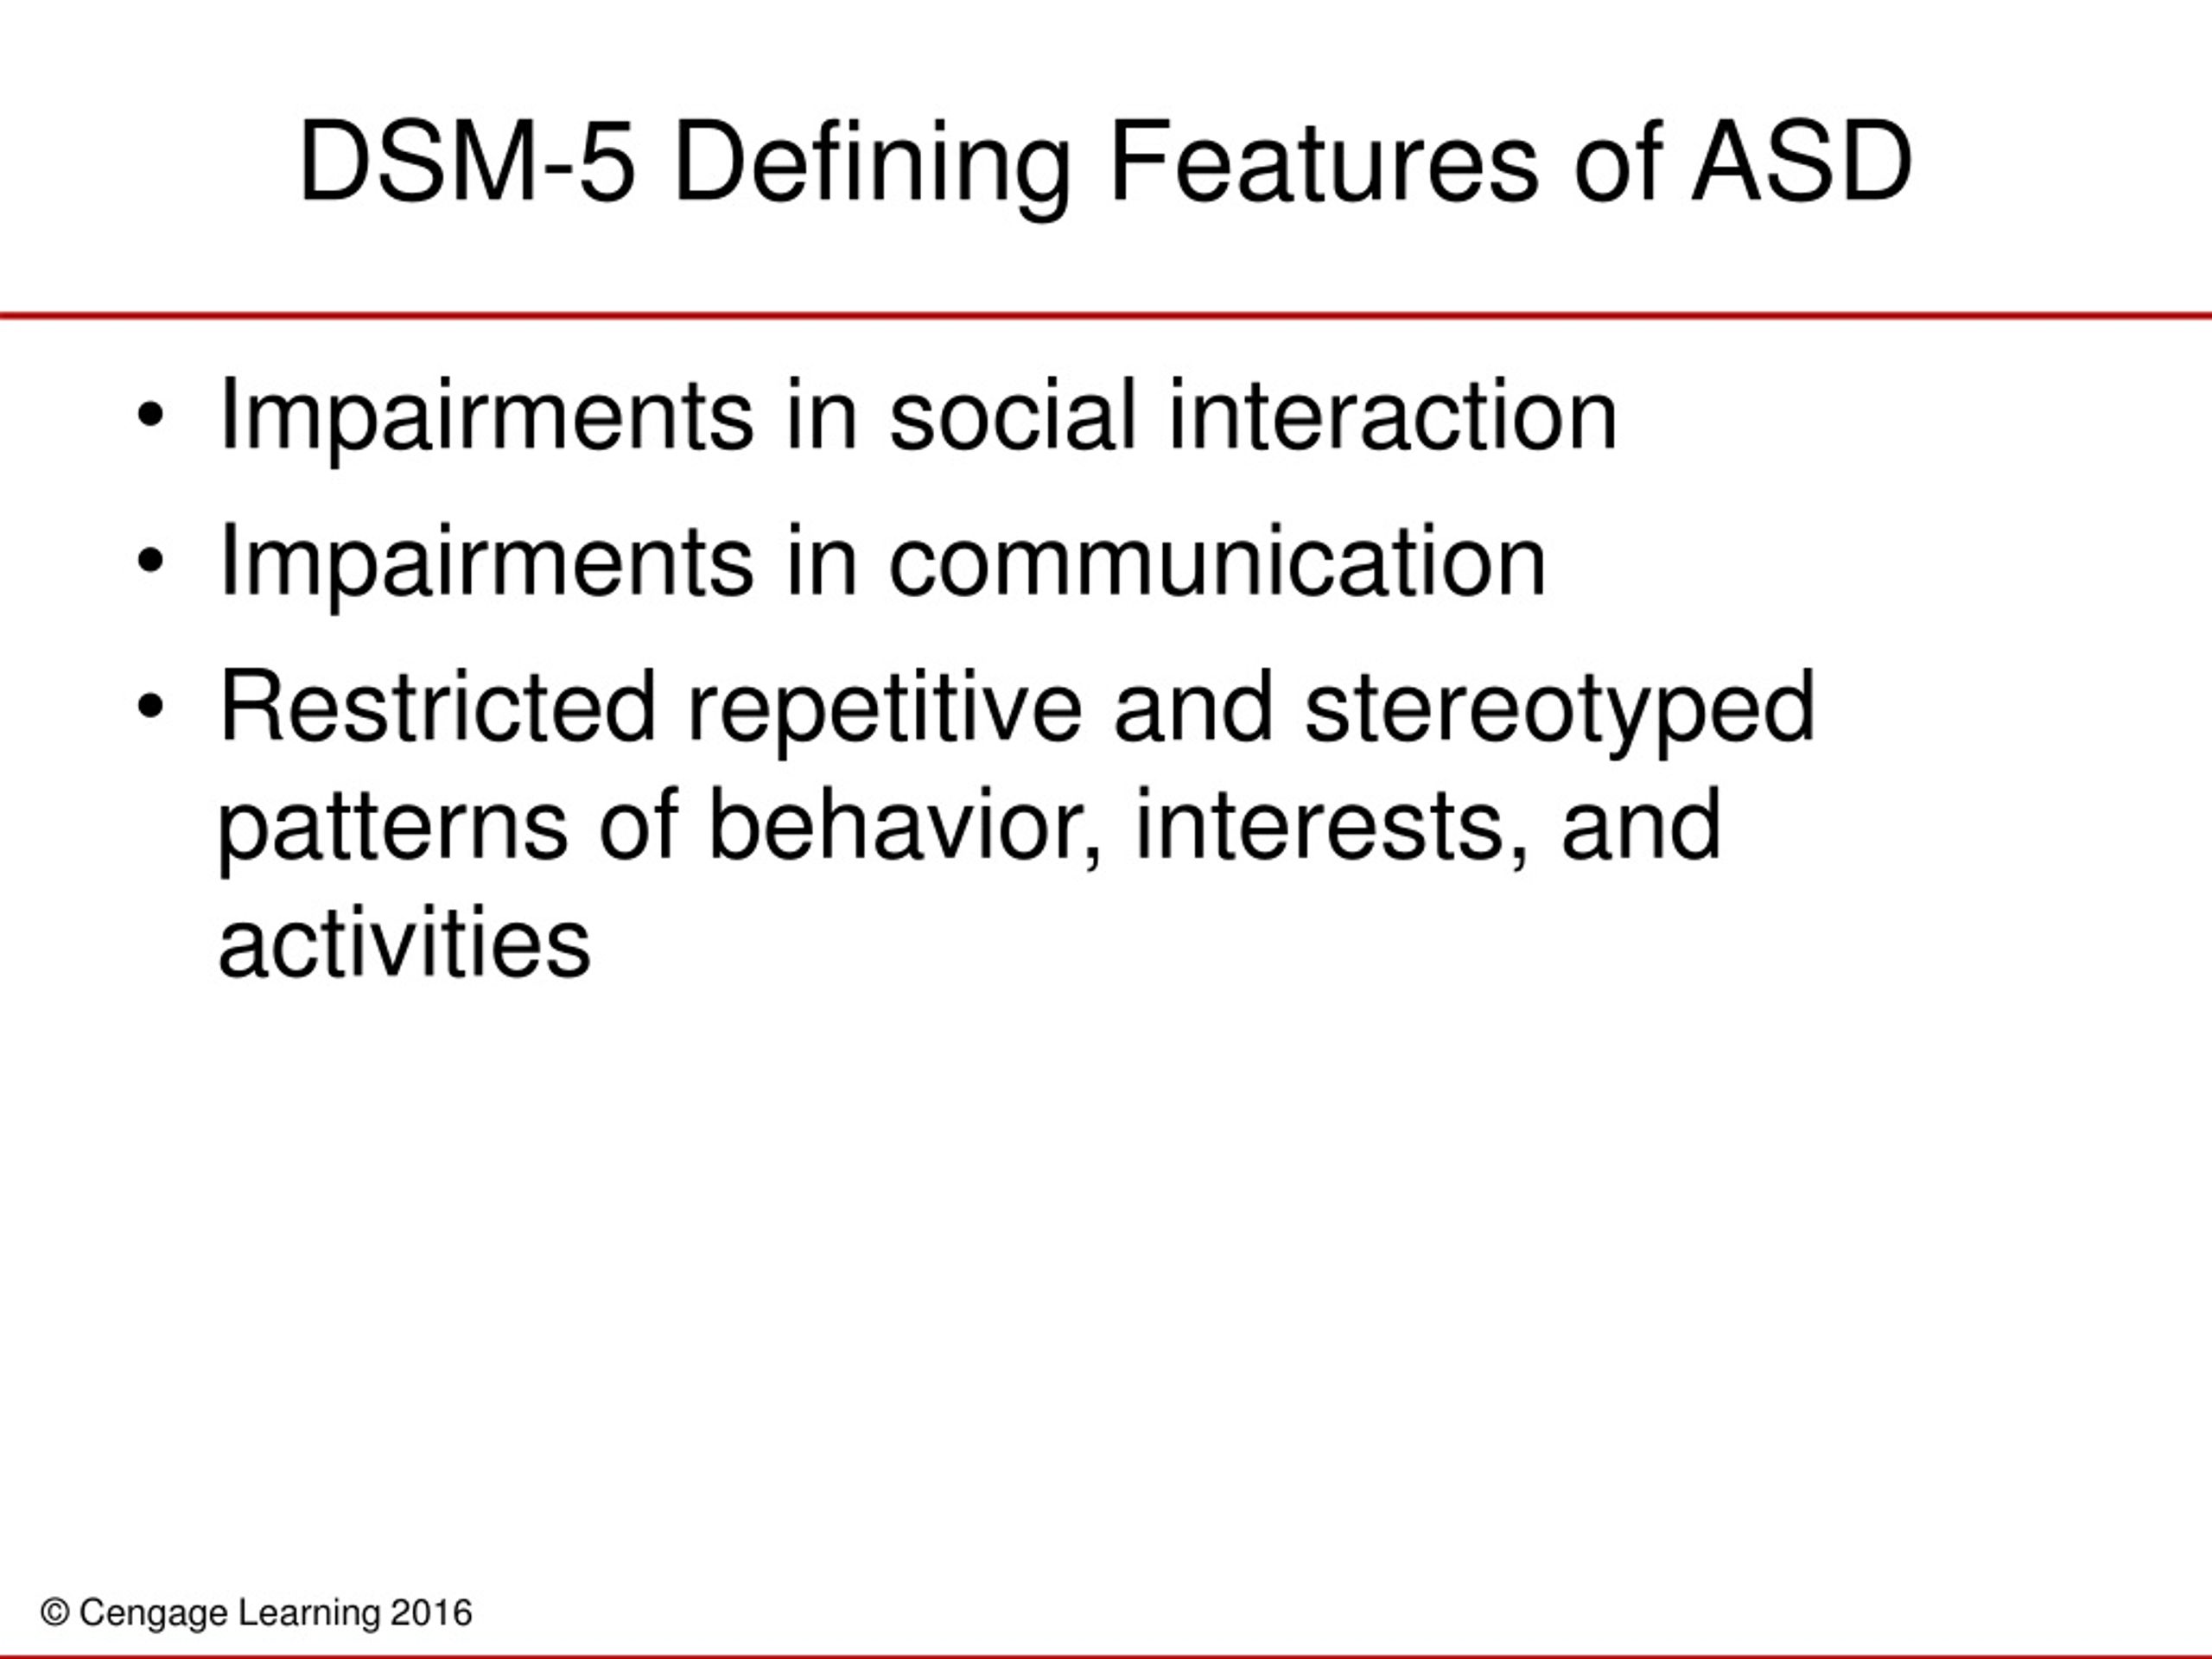 dsm 5 definition of asd